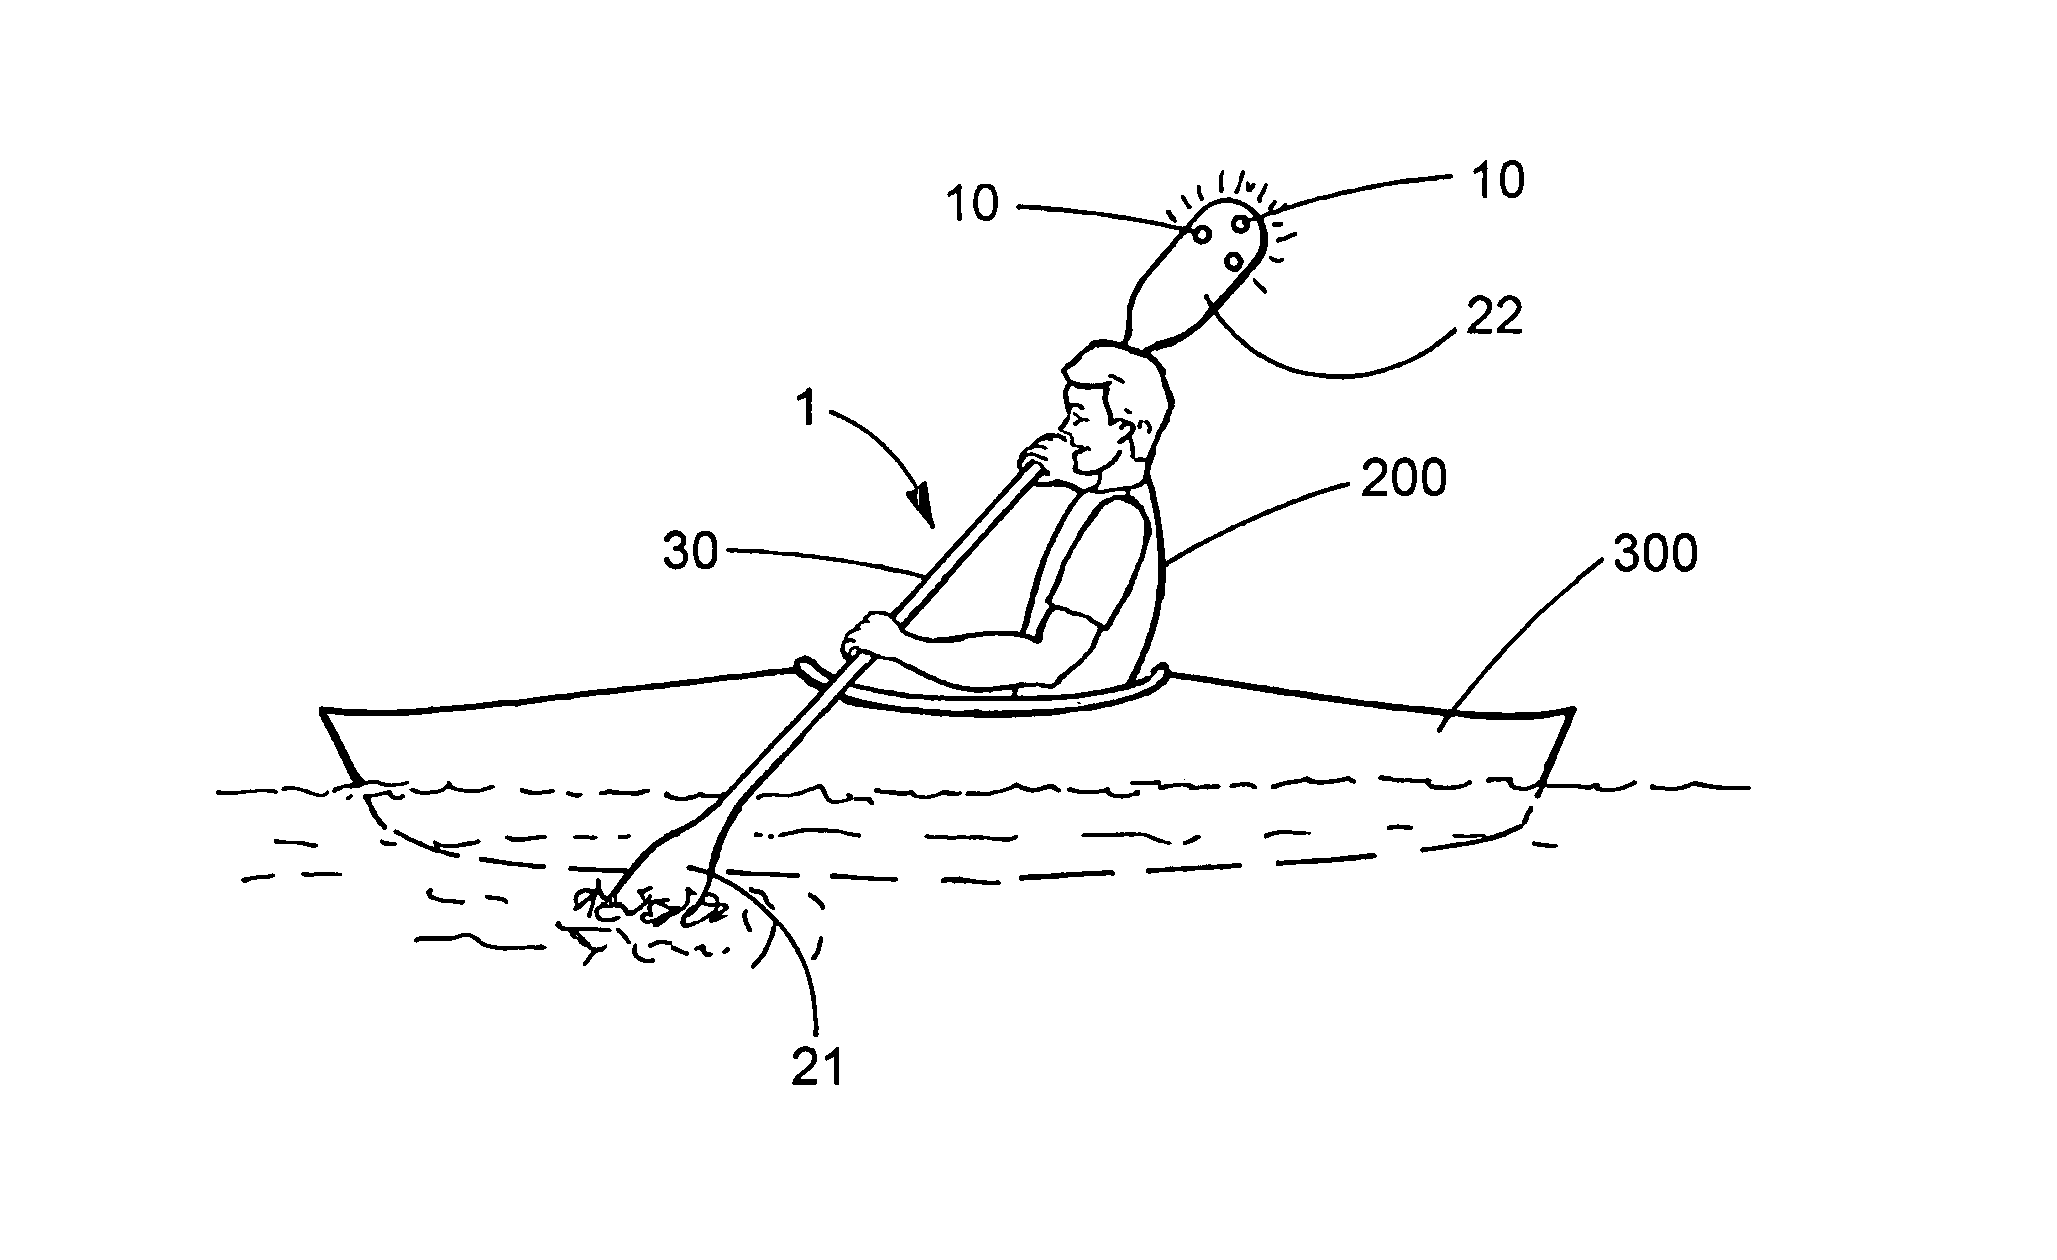 Kayak paddle with safety light